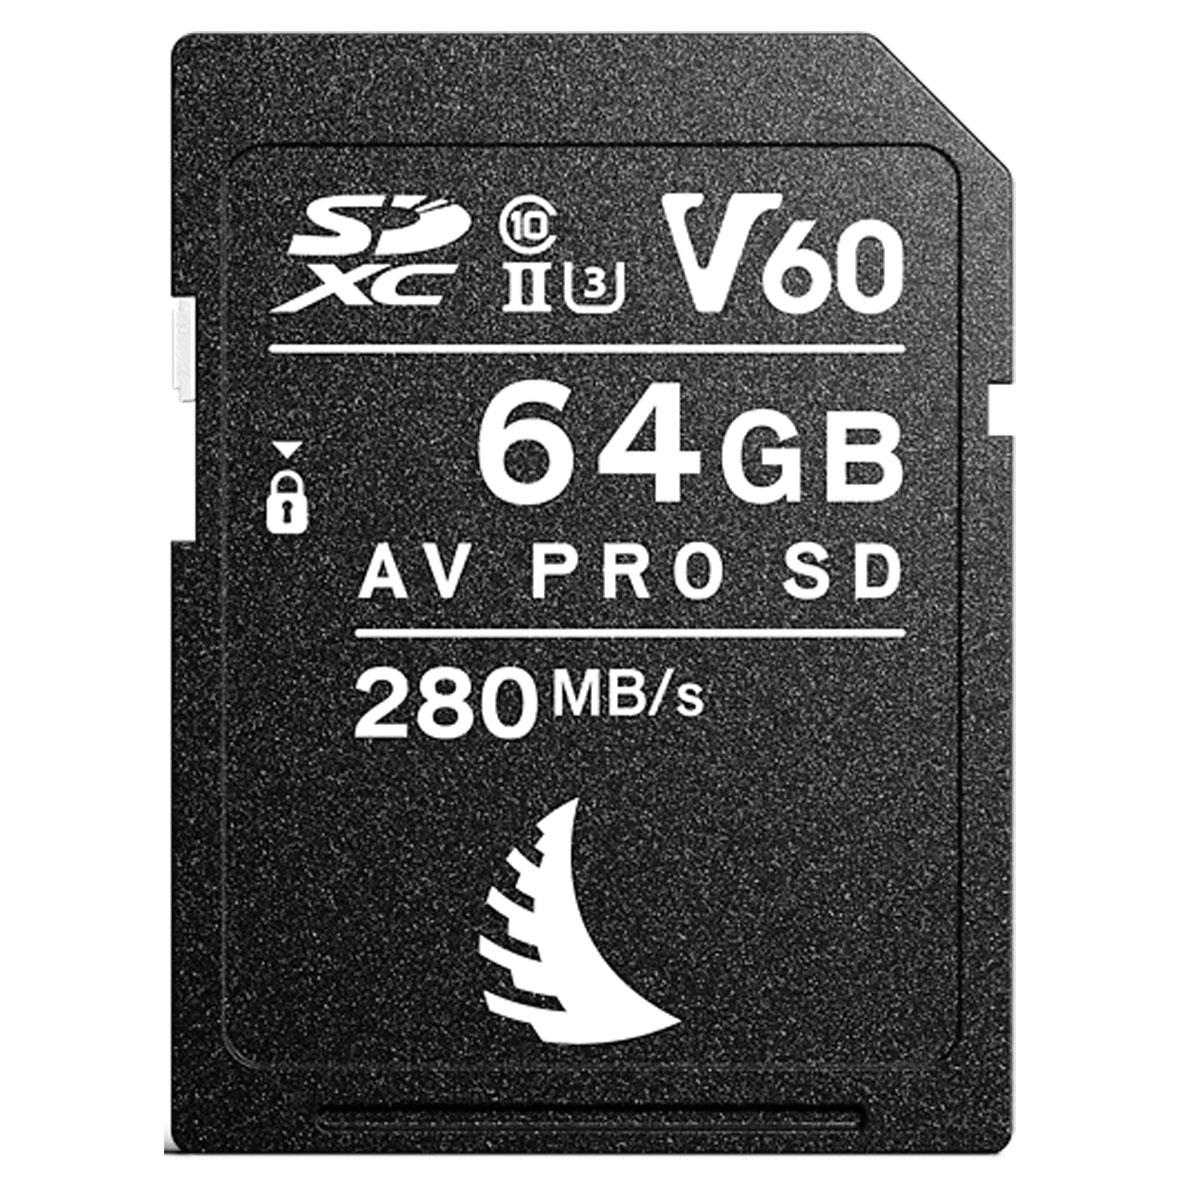 Angelbird AV PRO SD MK2 V60 64GB SDXC UHS-II Memory Card